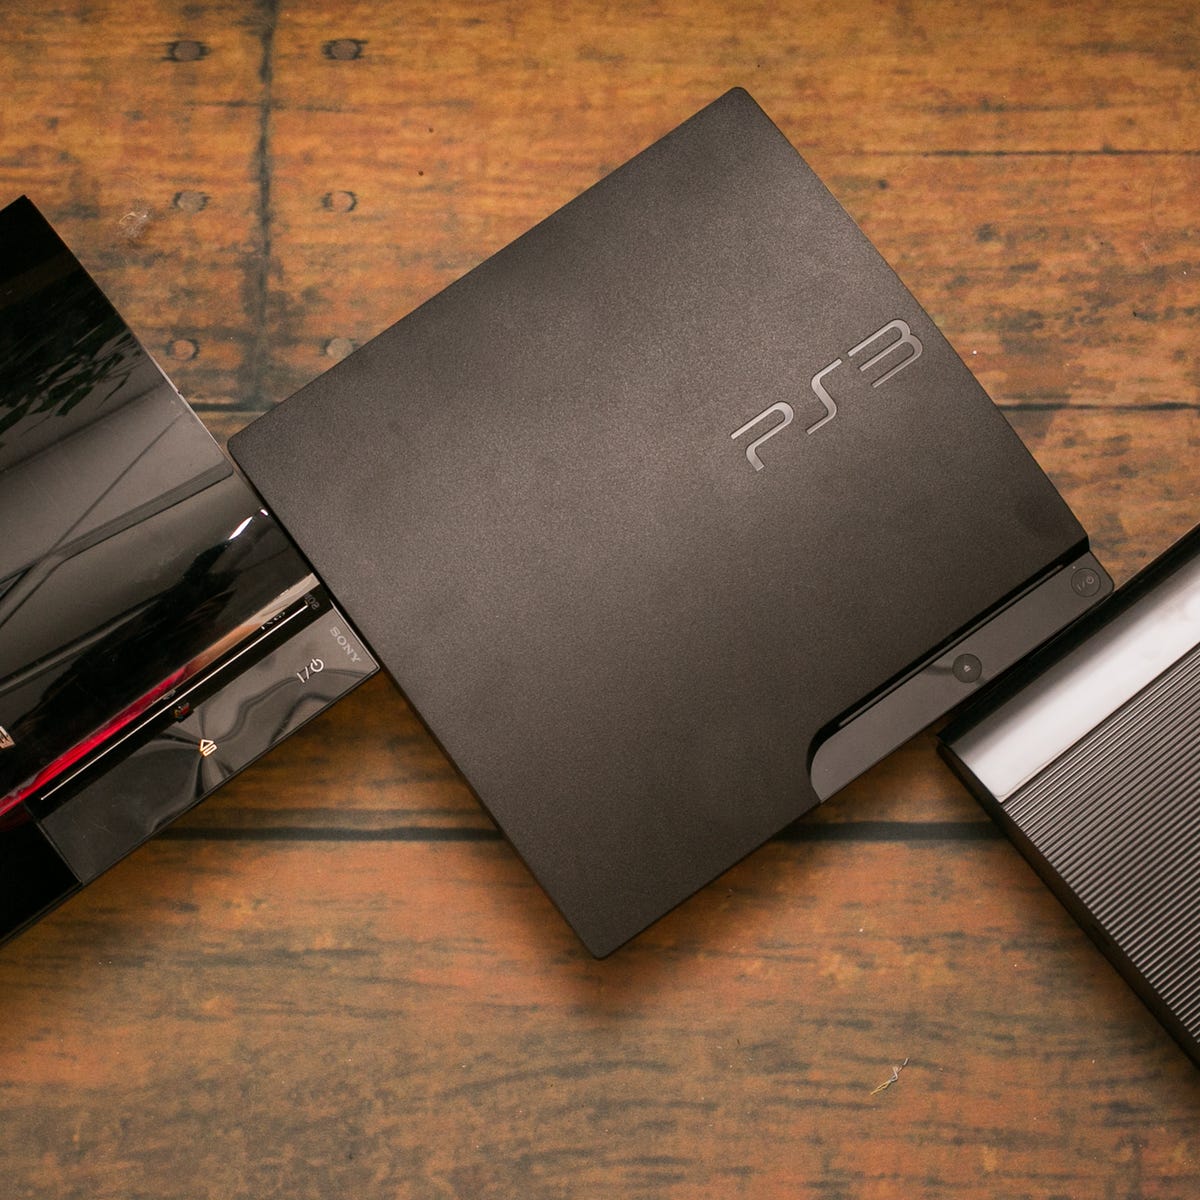 Masaccio Donación detrás Sony PlayStation 3 Super Slim review: Sony shrinks down new PS3 -- except  for the price - CNET